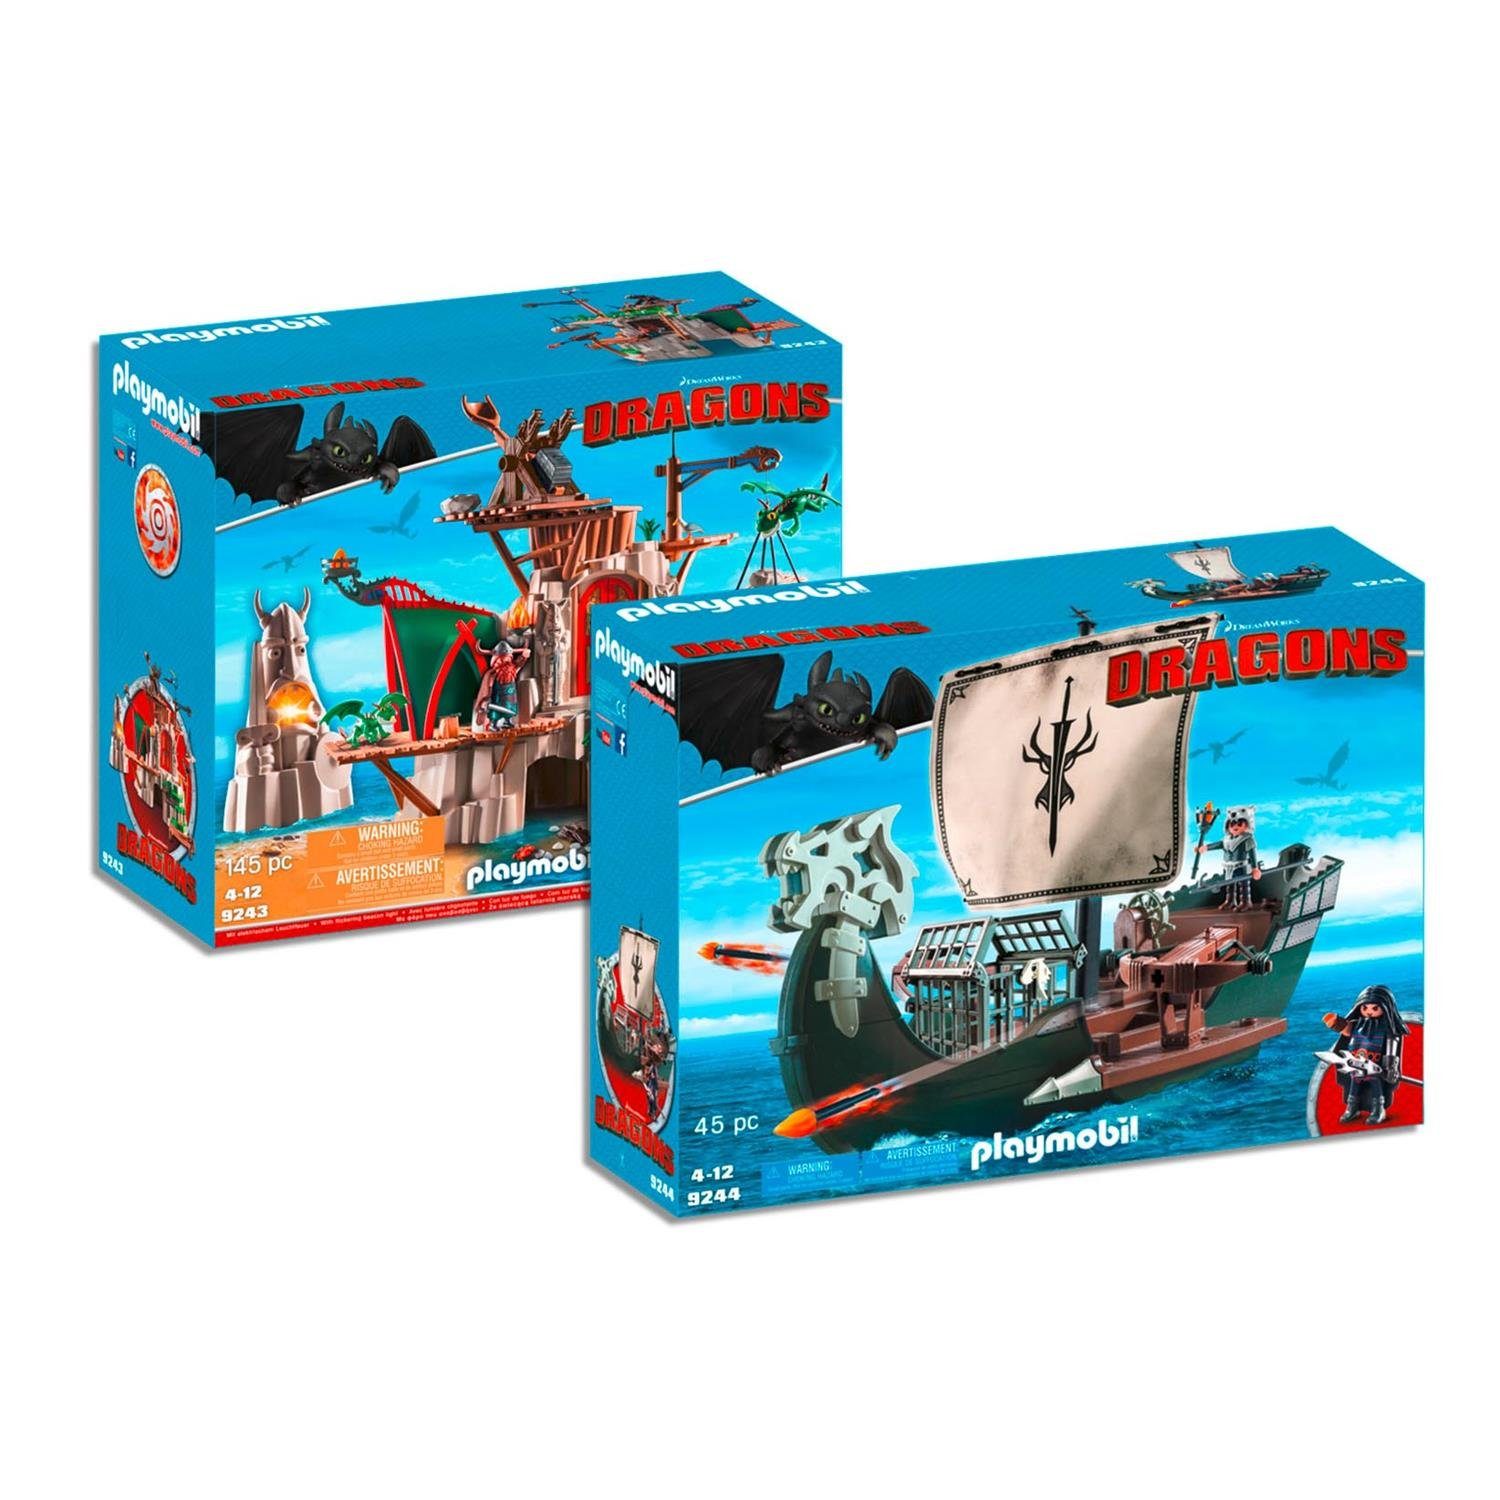 Playmobil® Spielbausteine 9243-4 Dragons Set 3 - 2er Set 9243 + 9244